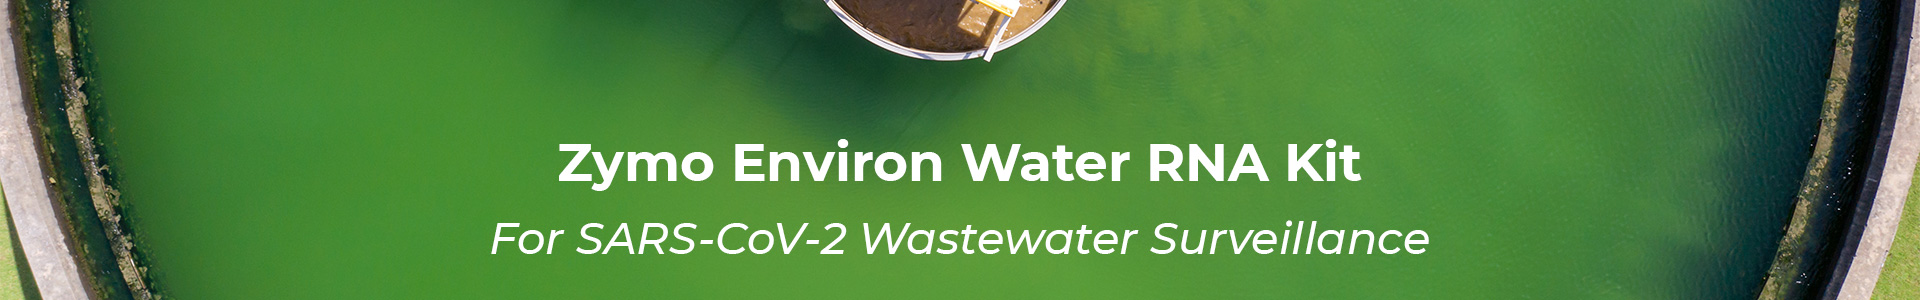 Header Banner for Zymo Environ Wastewater